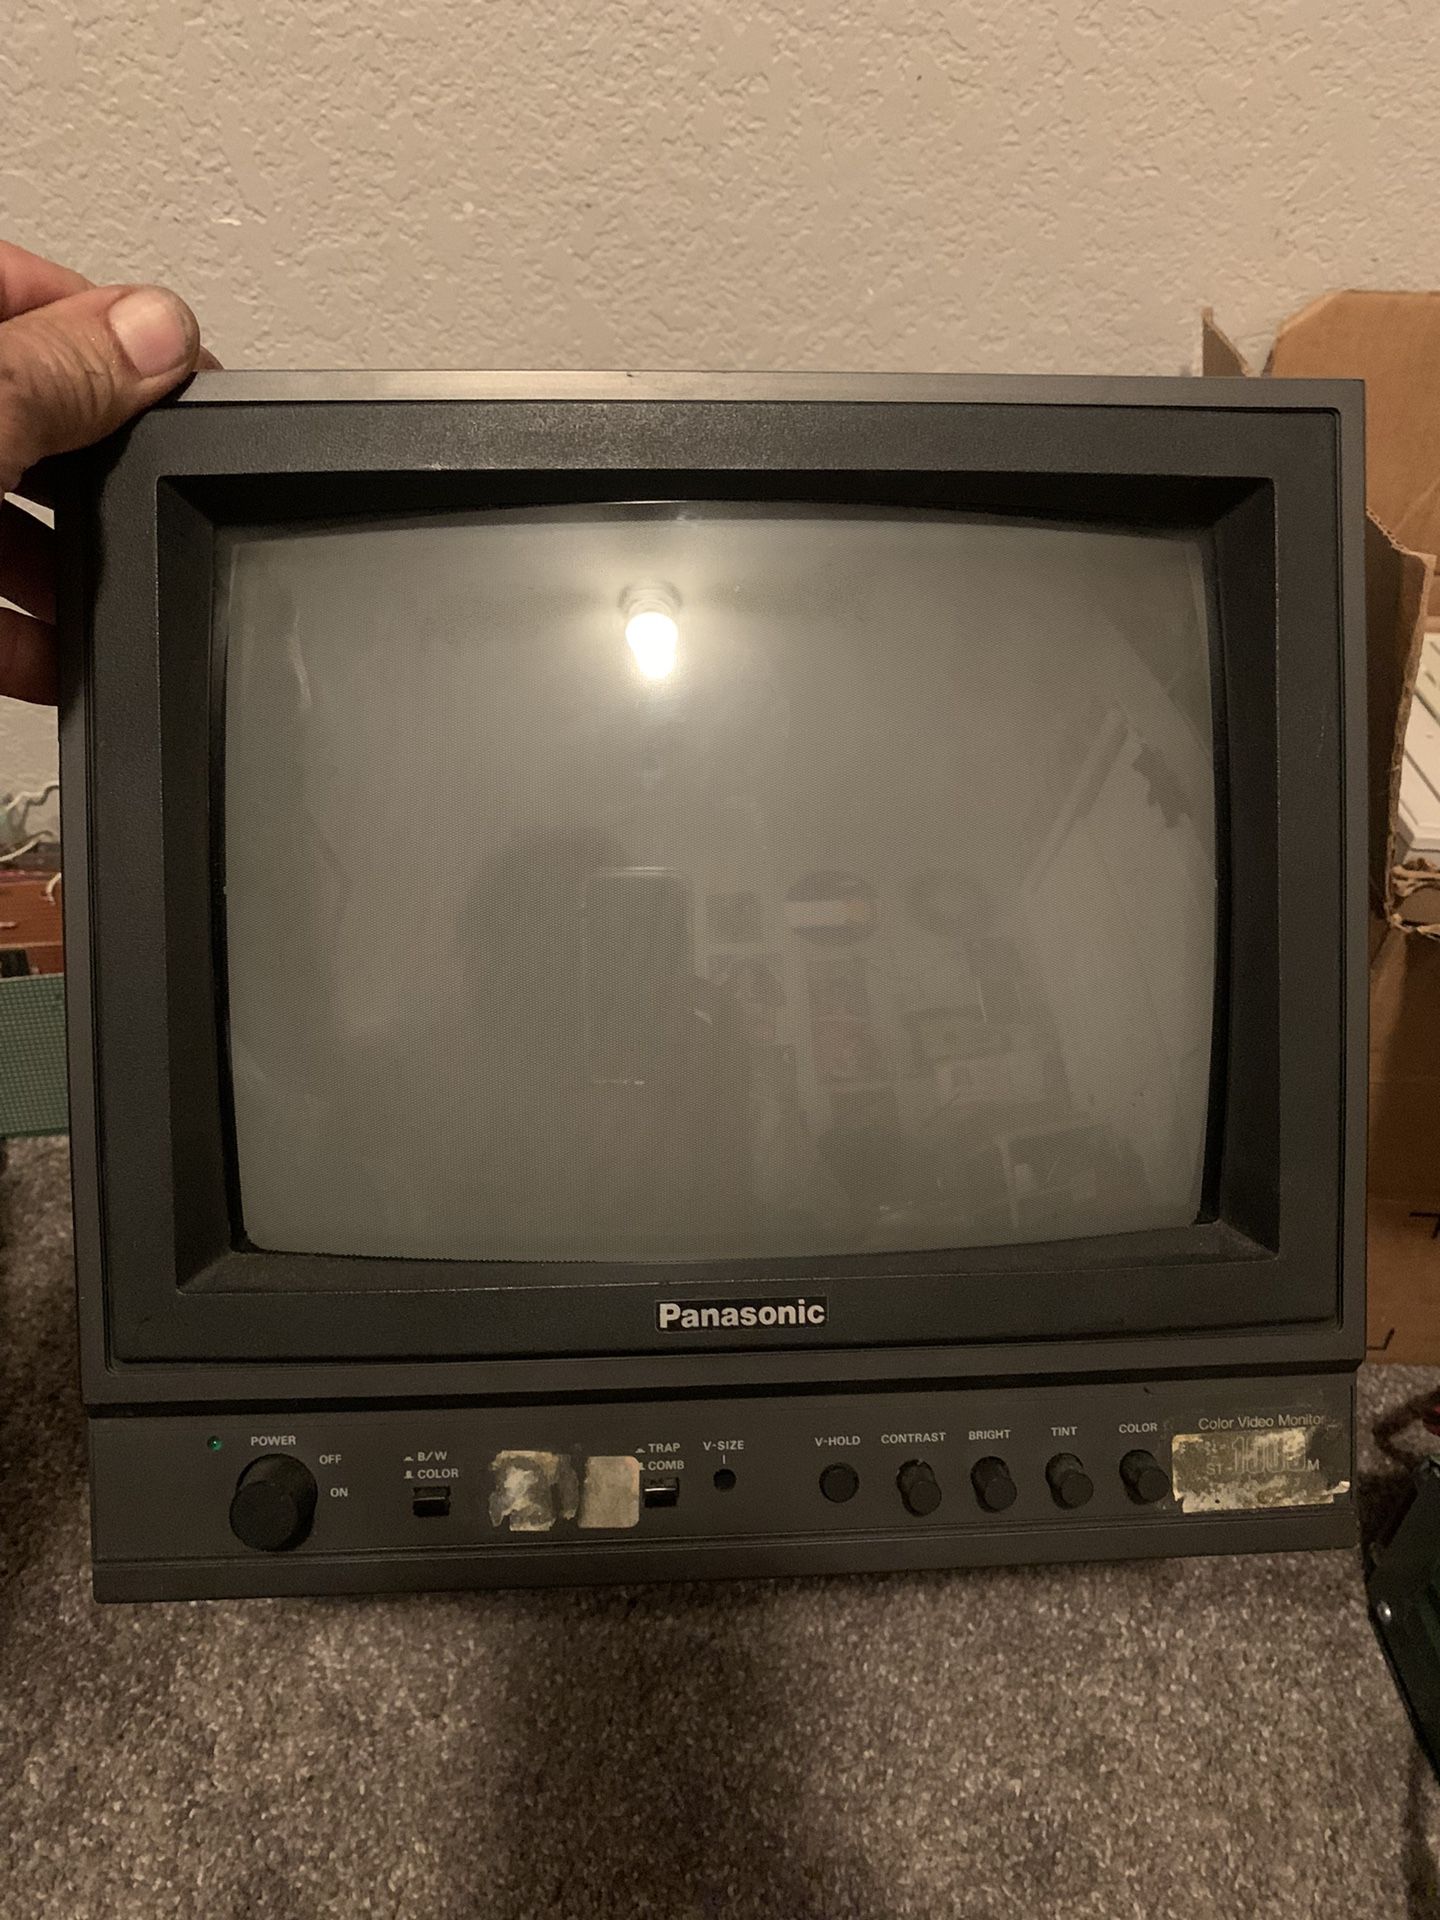 Panasonic st-1000m BNC Crt monitor